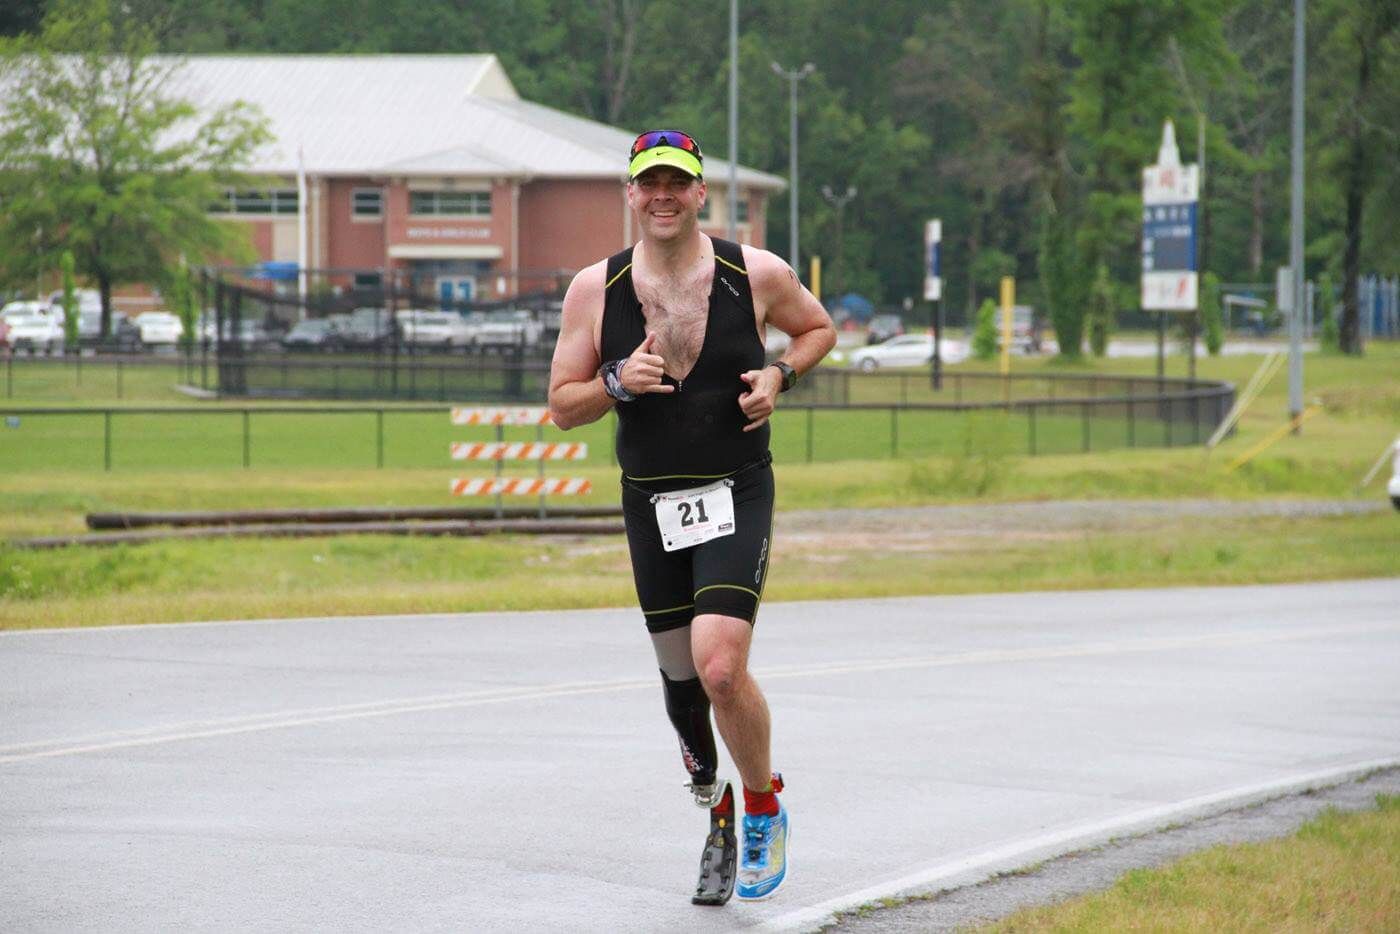 Chris M. running in a triathlon